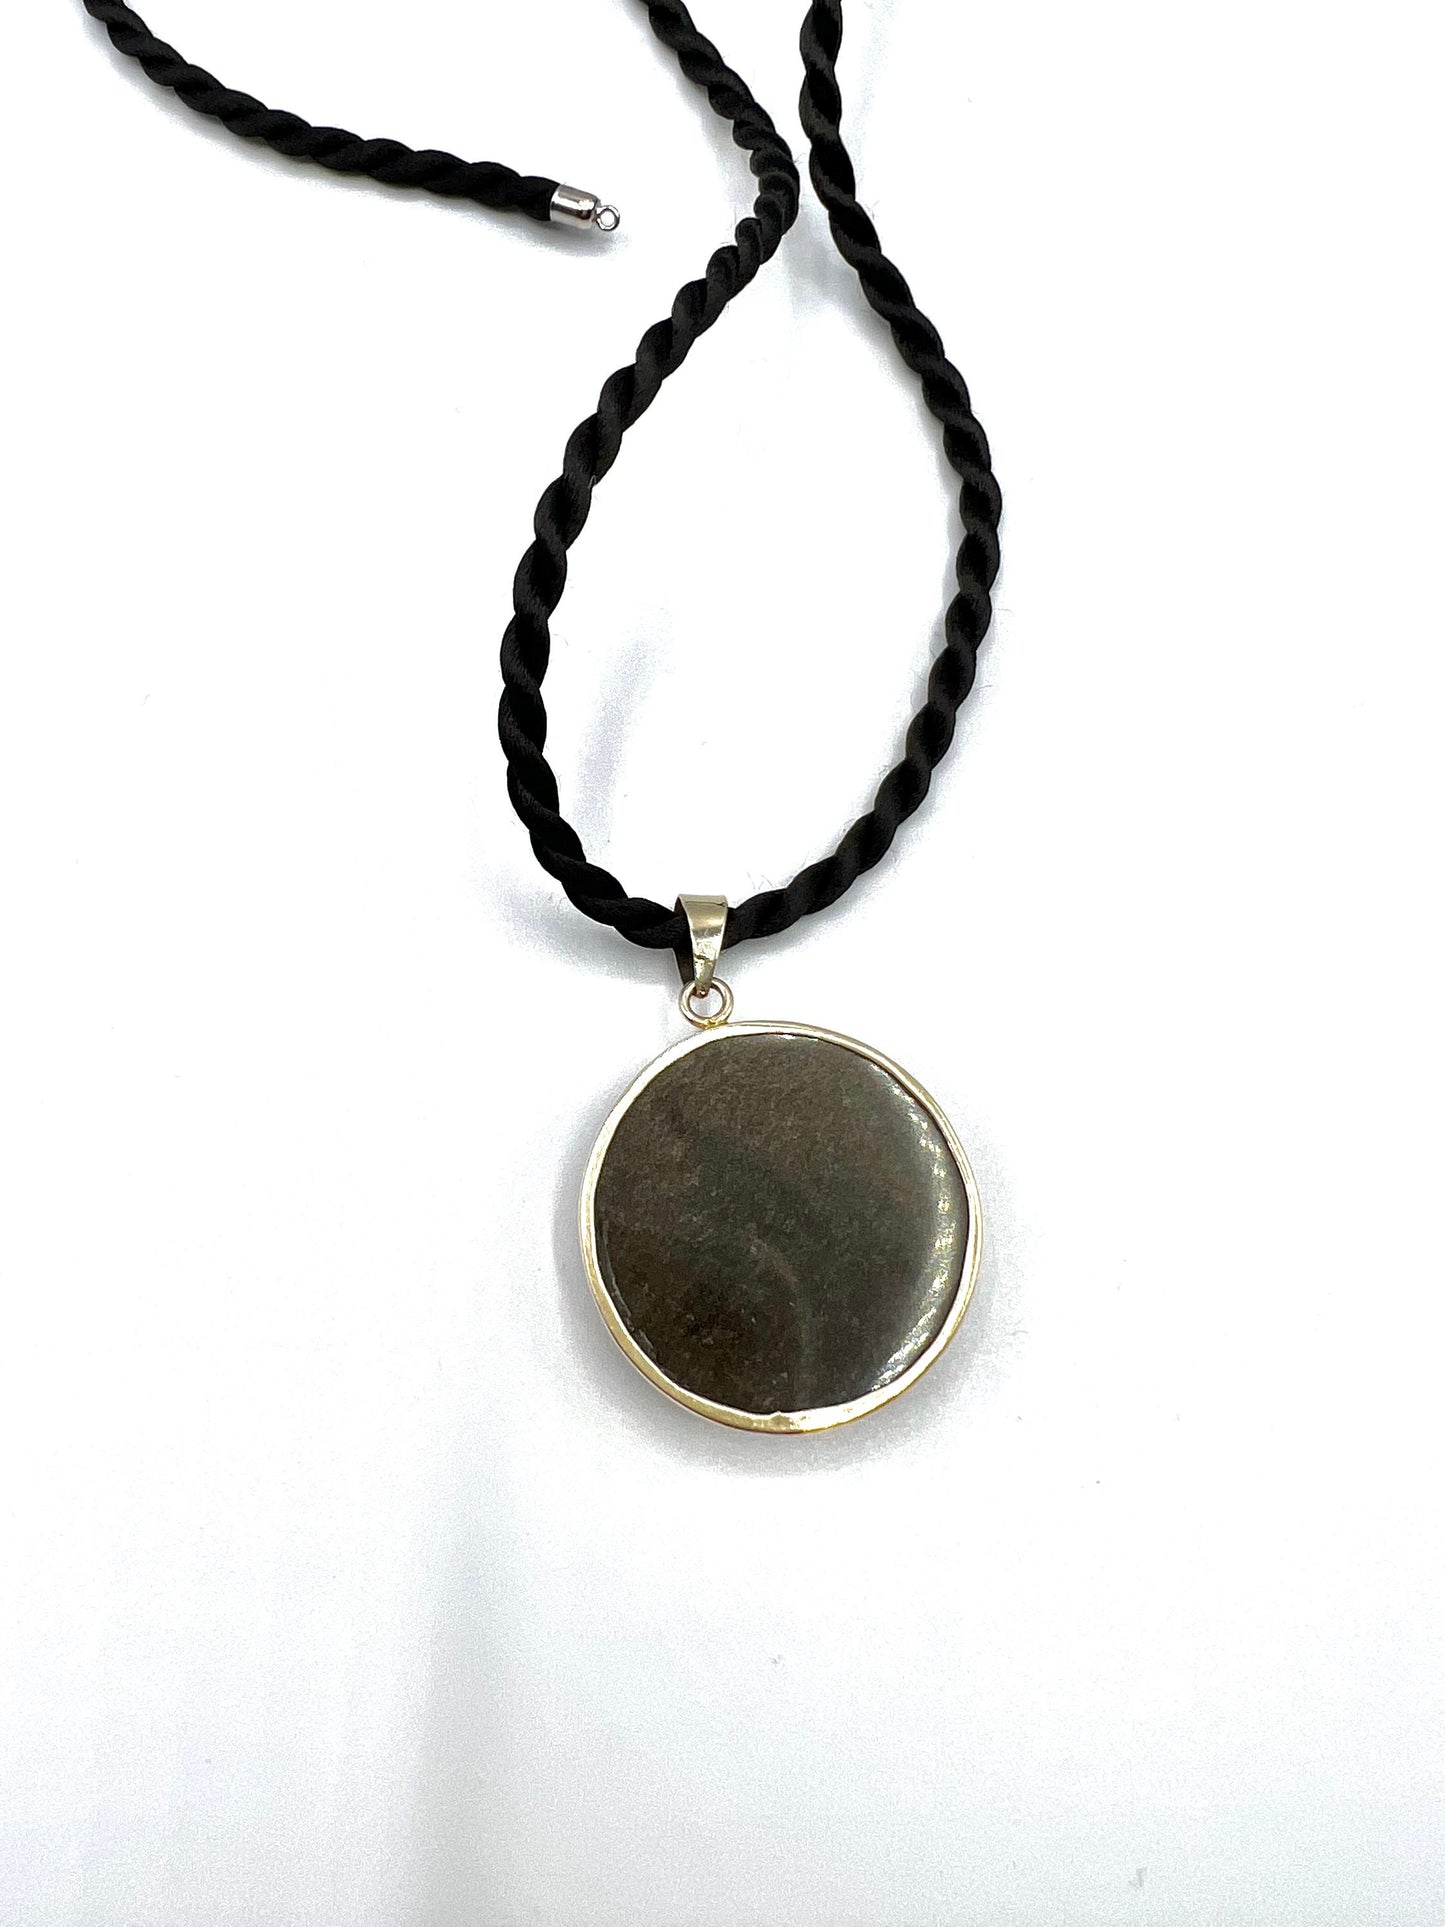 Black Obsidian Tree Of Life Pendant energy pendant necklace Sacred healing crystal jewelry